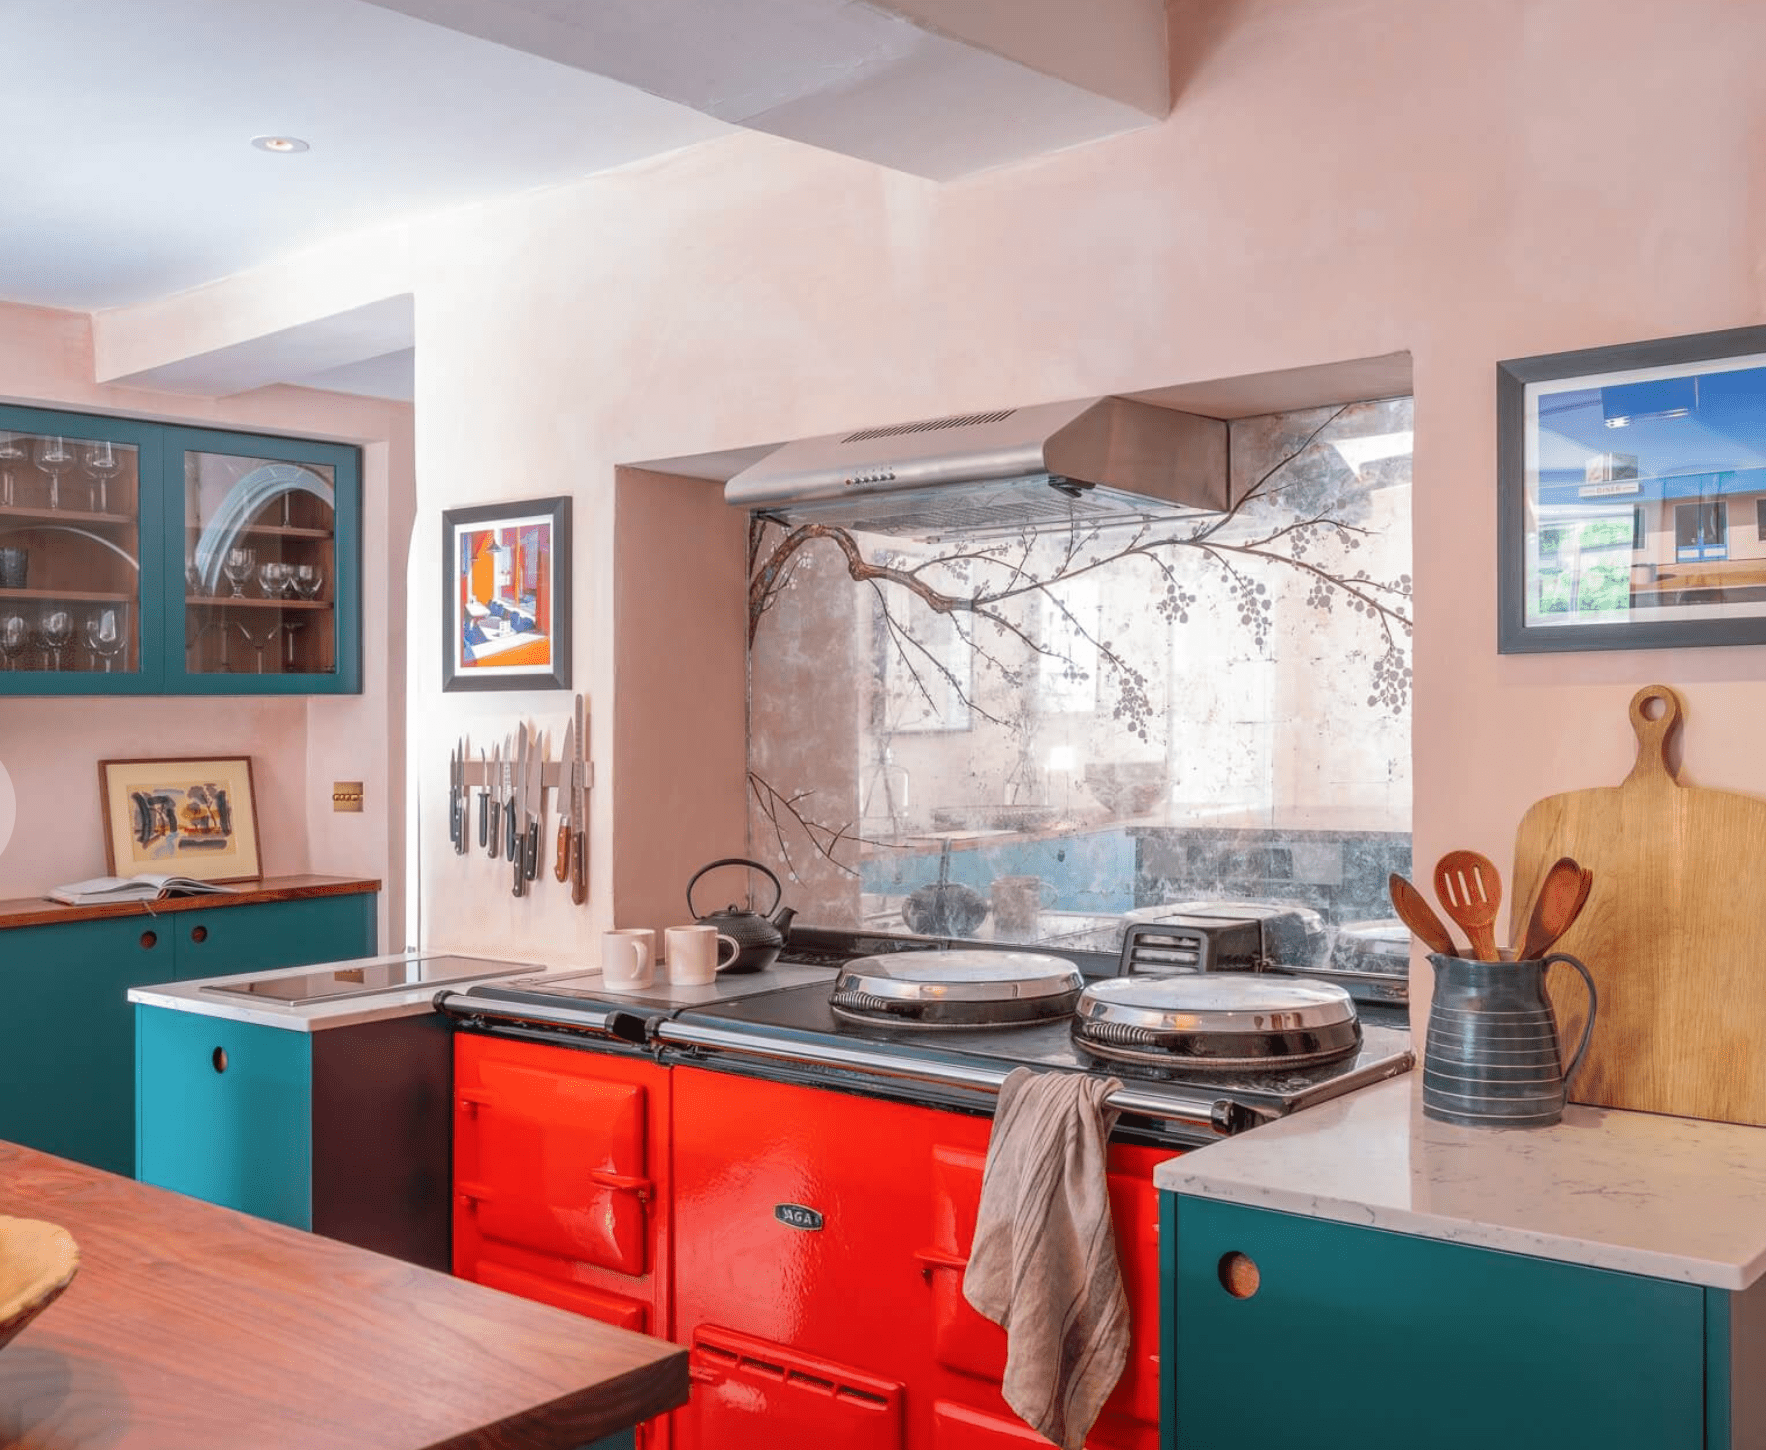 Kitchen Appliance color FAQs